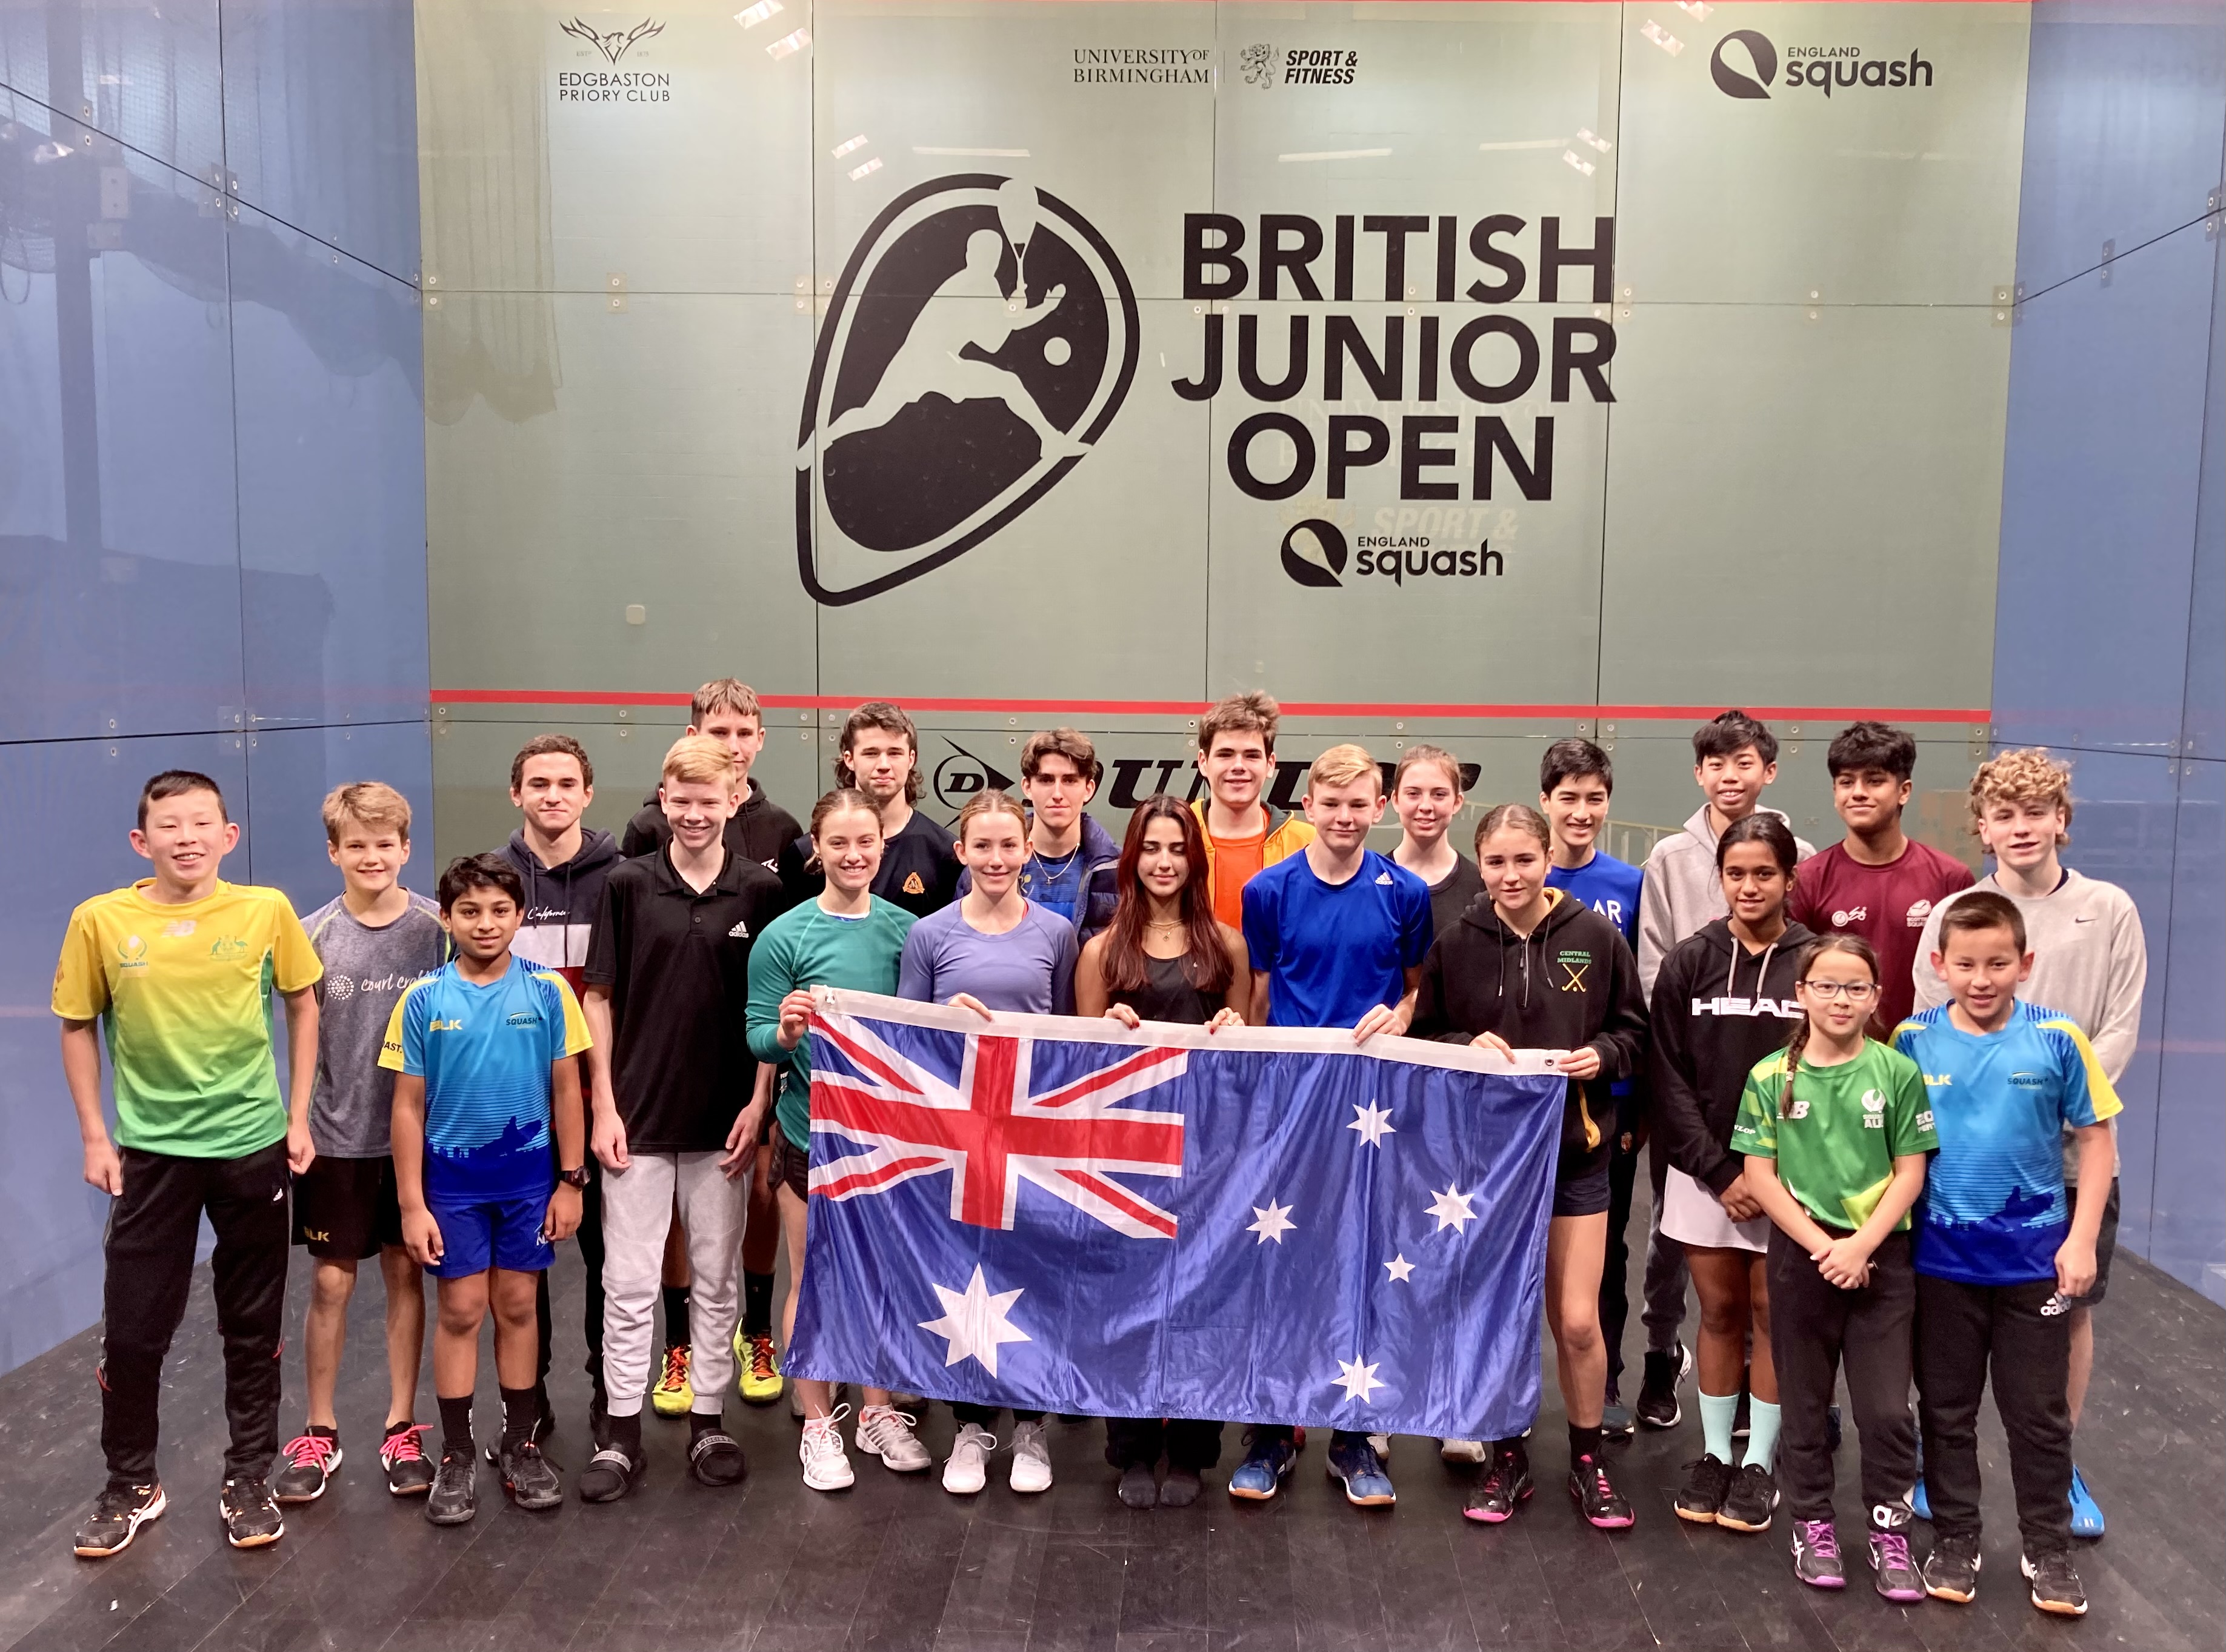 Australian Junior players set to compete at prestige British Junior